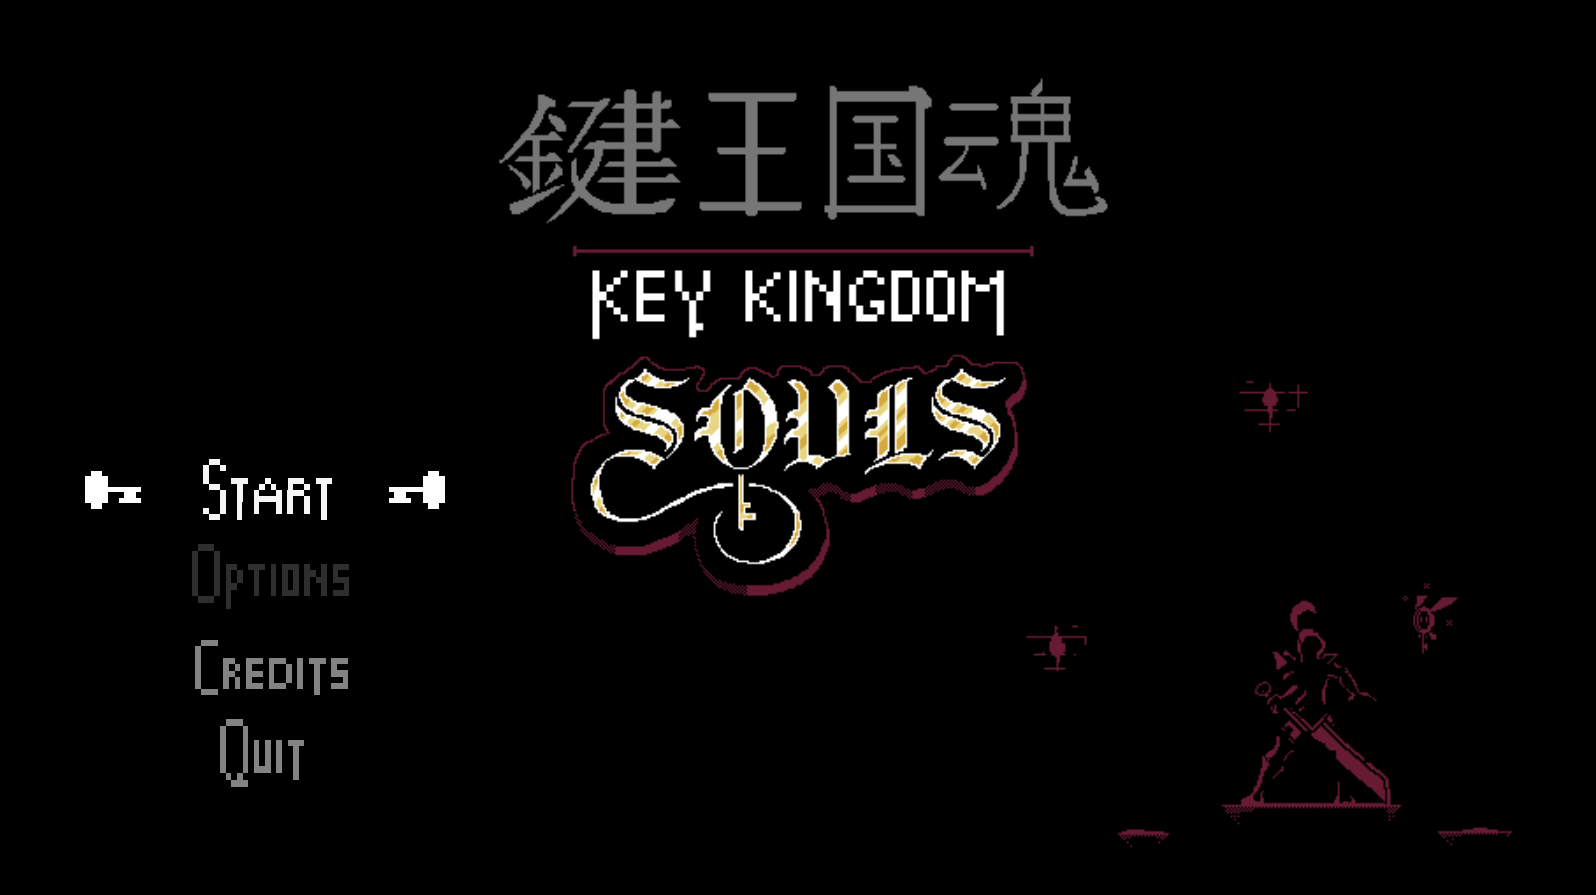 Key Kingdom Souls